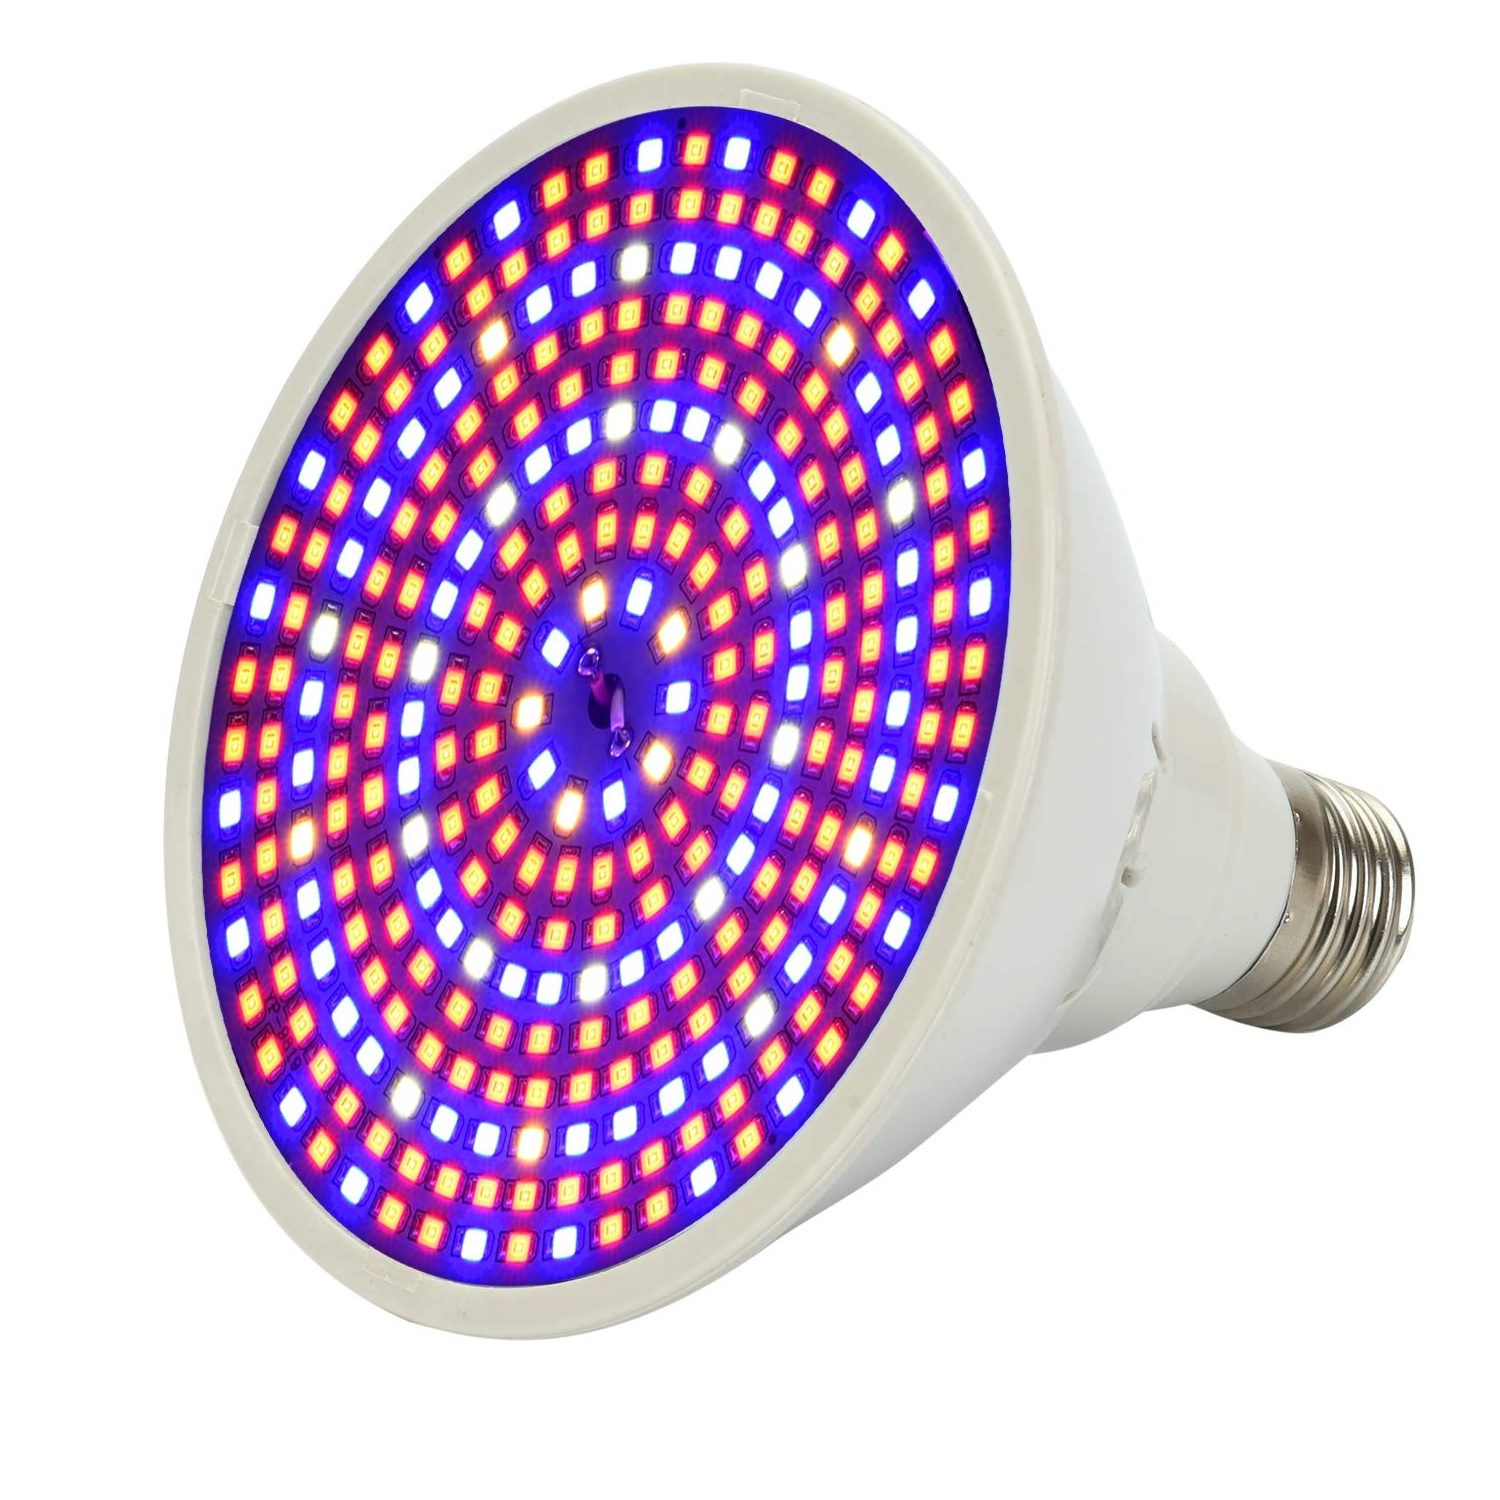 Trouw ironie bedreiging Led Kweeklamp - Groeilamp met E27 fitting - 300 LEDs - Full Spectrum lamp  met grote fitting - LedlampshopXL